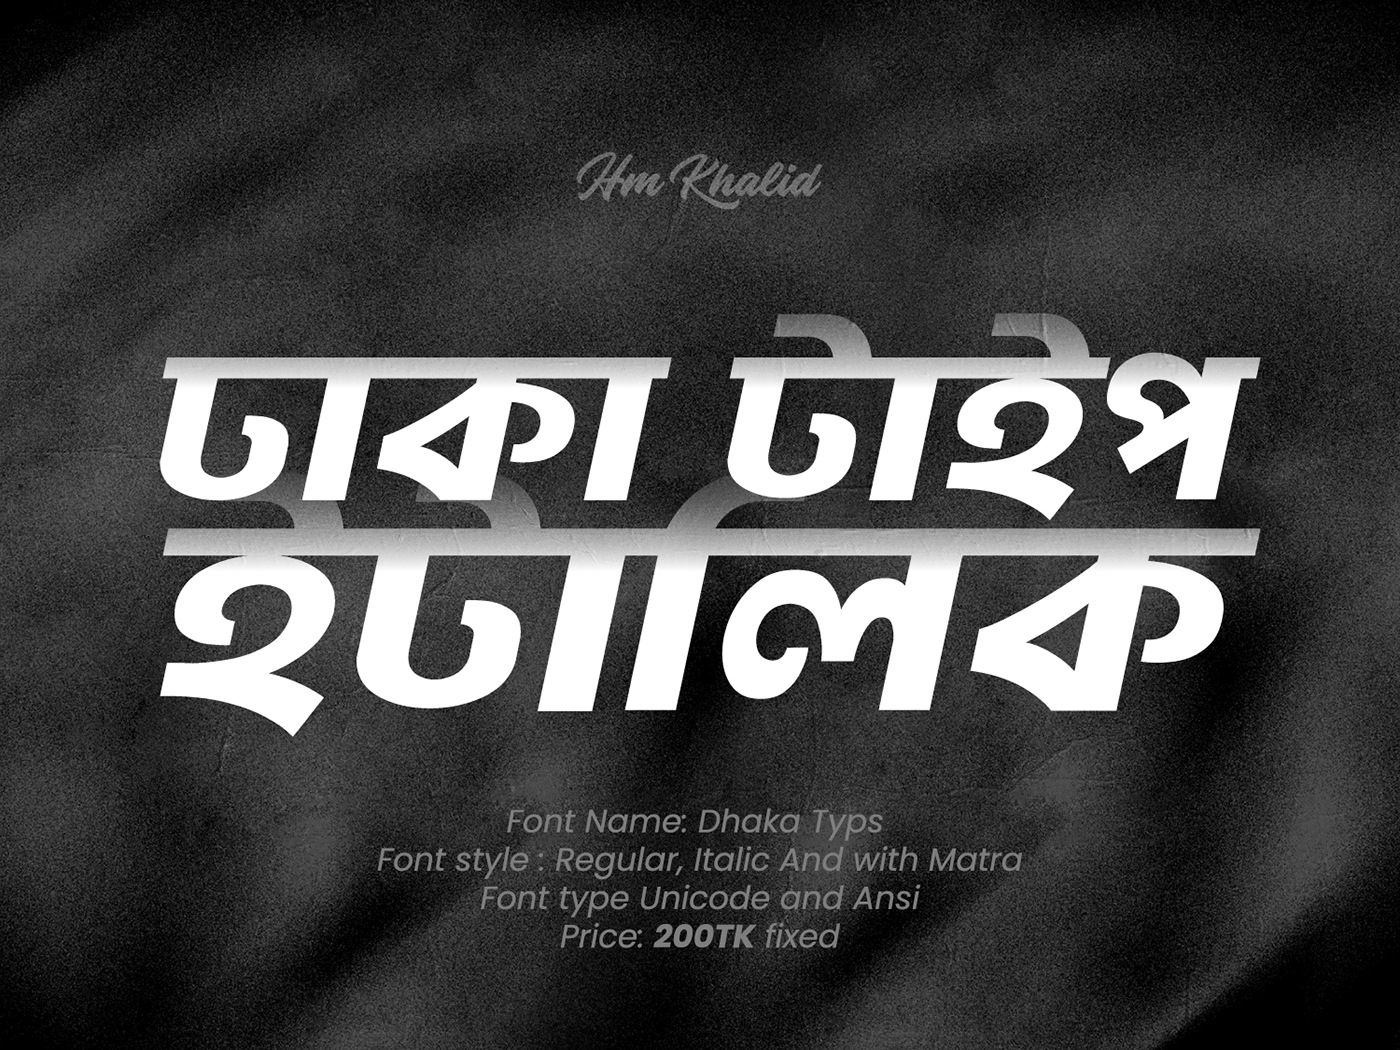 Bangla Font fonts Bangla Pro font Dhaka Type Bangla Font HM Khalid Dhaka font Dhaka type Dhaka type Font Dhaka type fonts